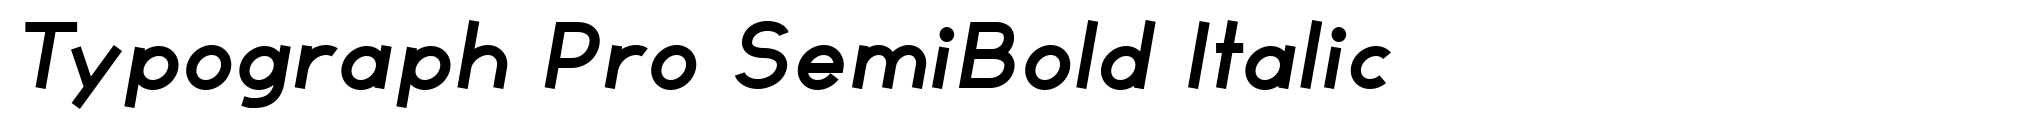 Typograph Pro SemiBold Italic image